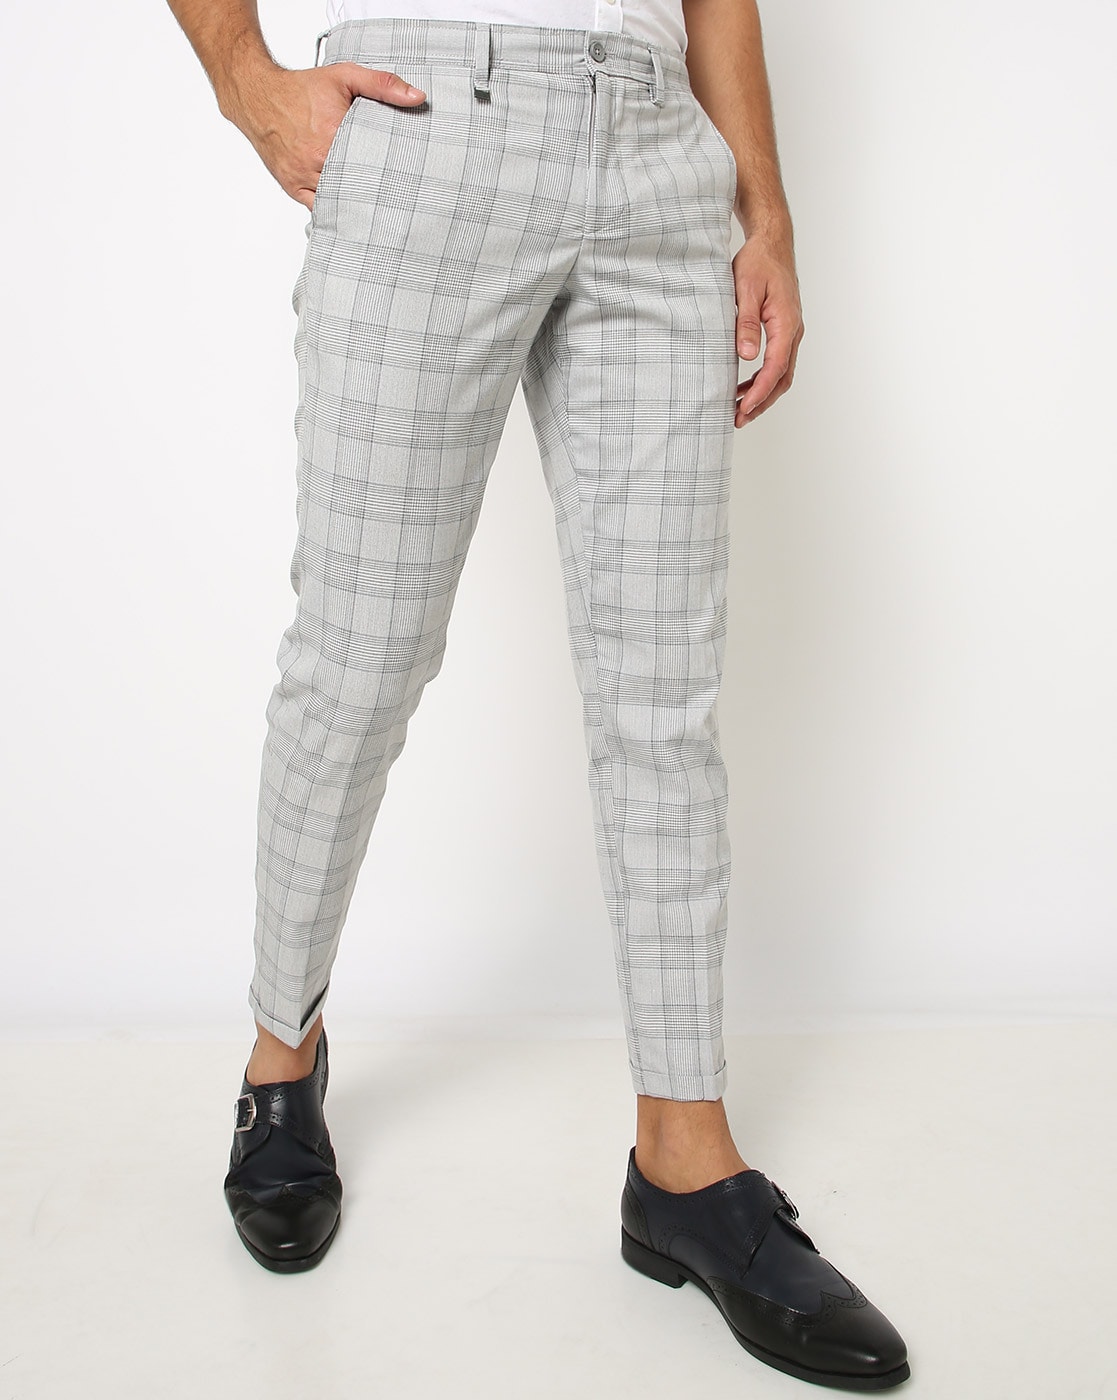 Lars Amadeus Men's Dress Plaid Pants Slim Fit Flat Front Check Chino Pants  Trousers 30 Blue : Target